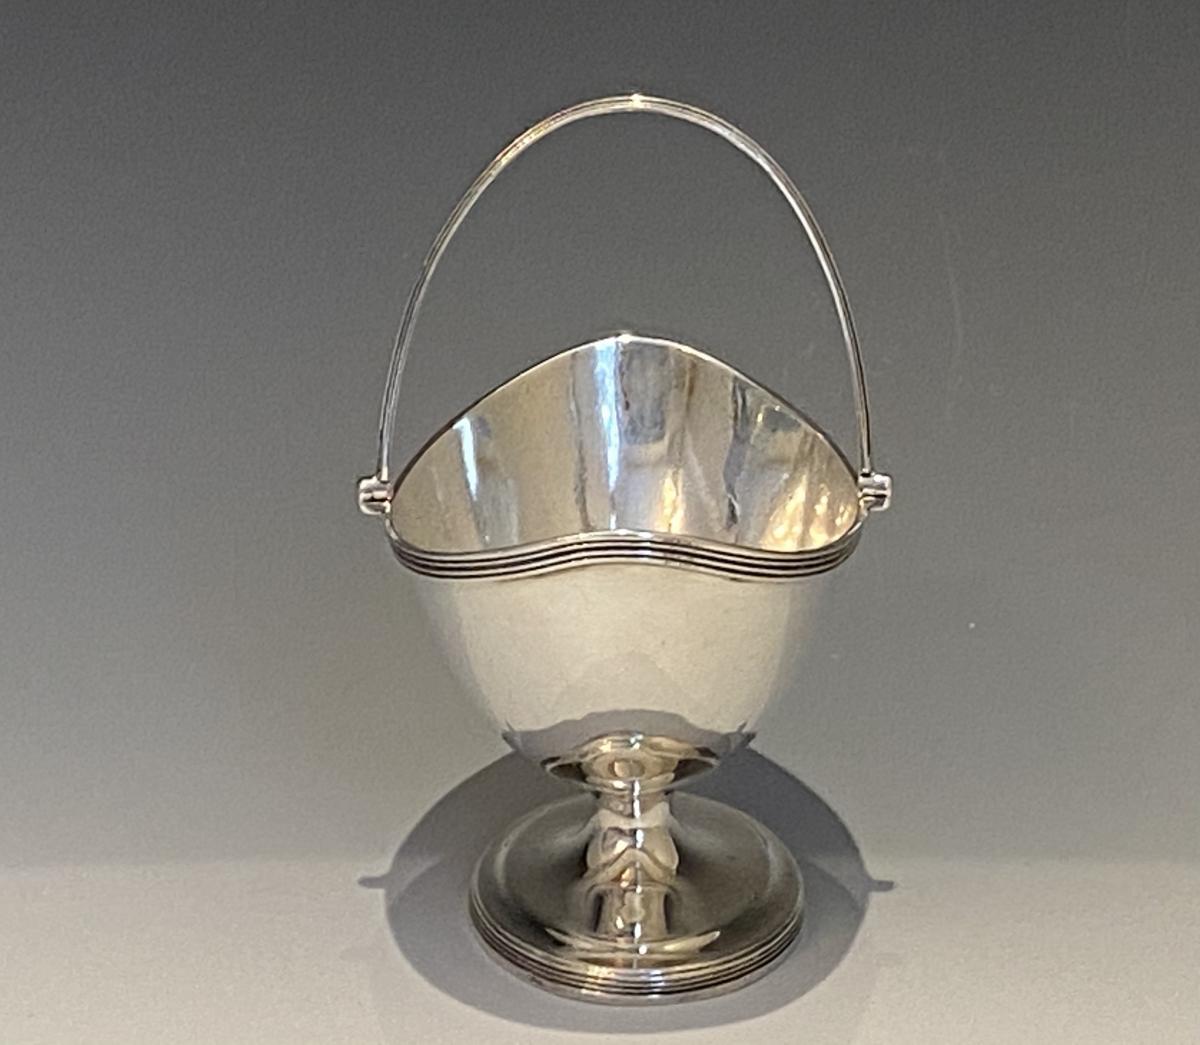 Henry Chawner silver sugar bowl basket 1790